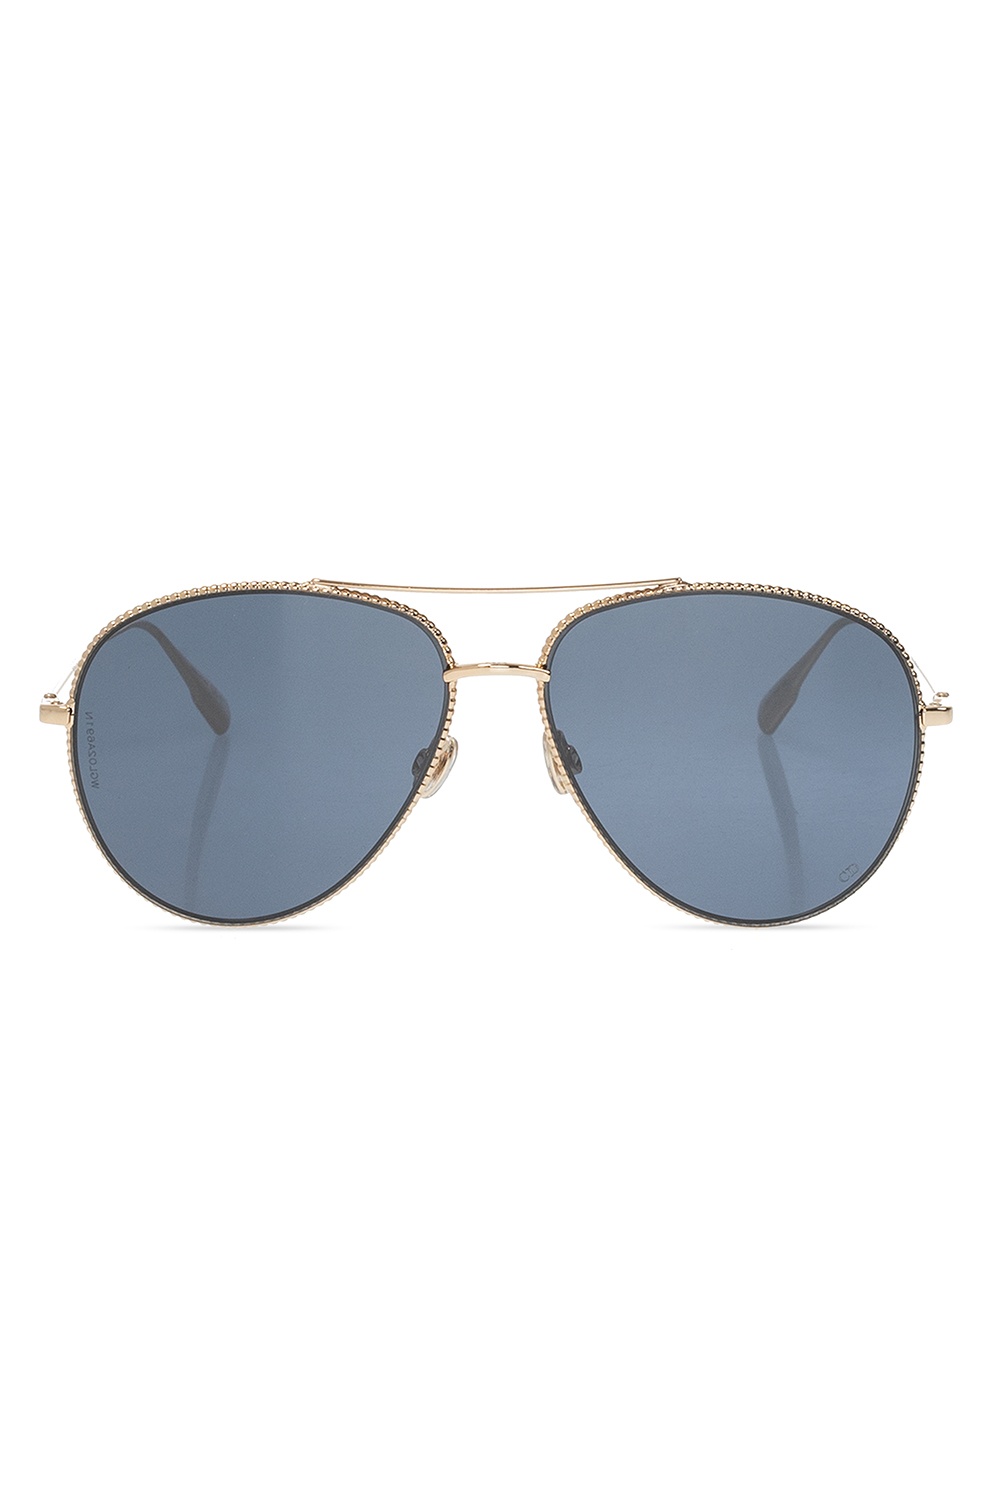 Dior ‘Society 3’ Lime sunglasses